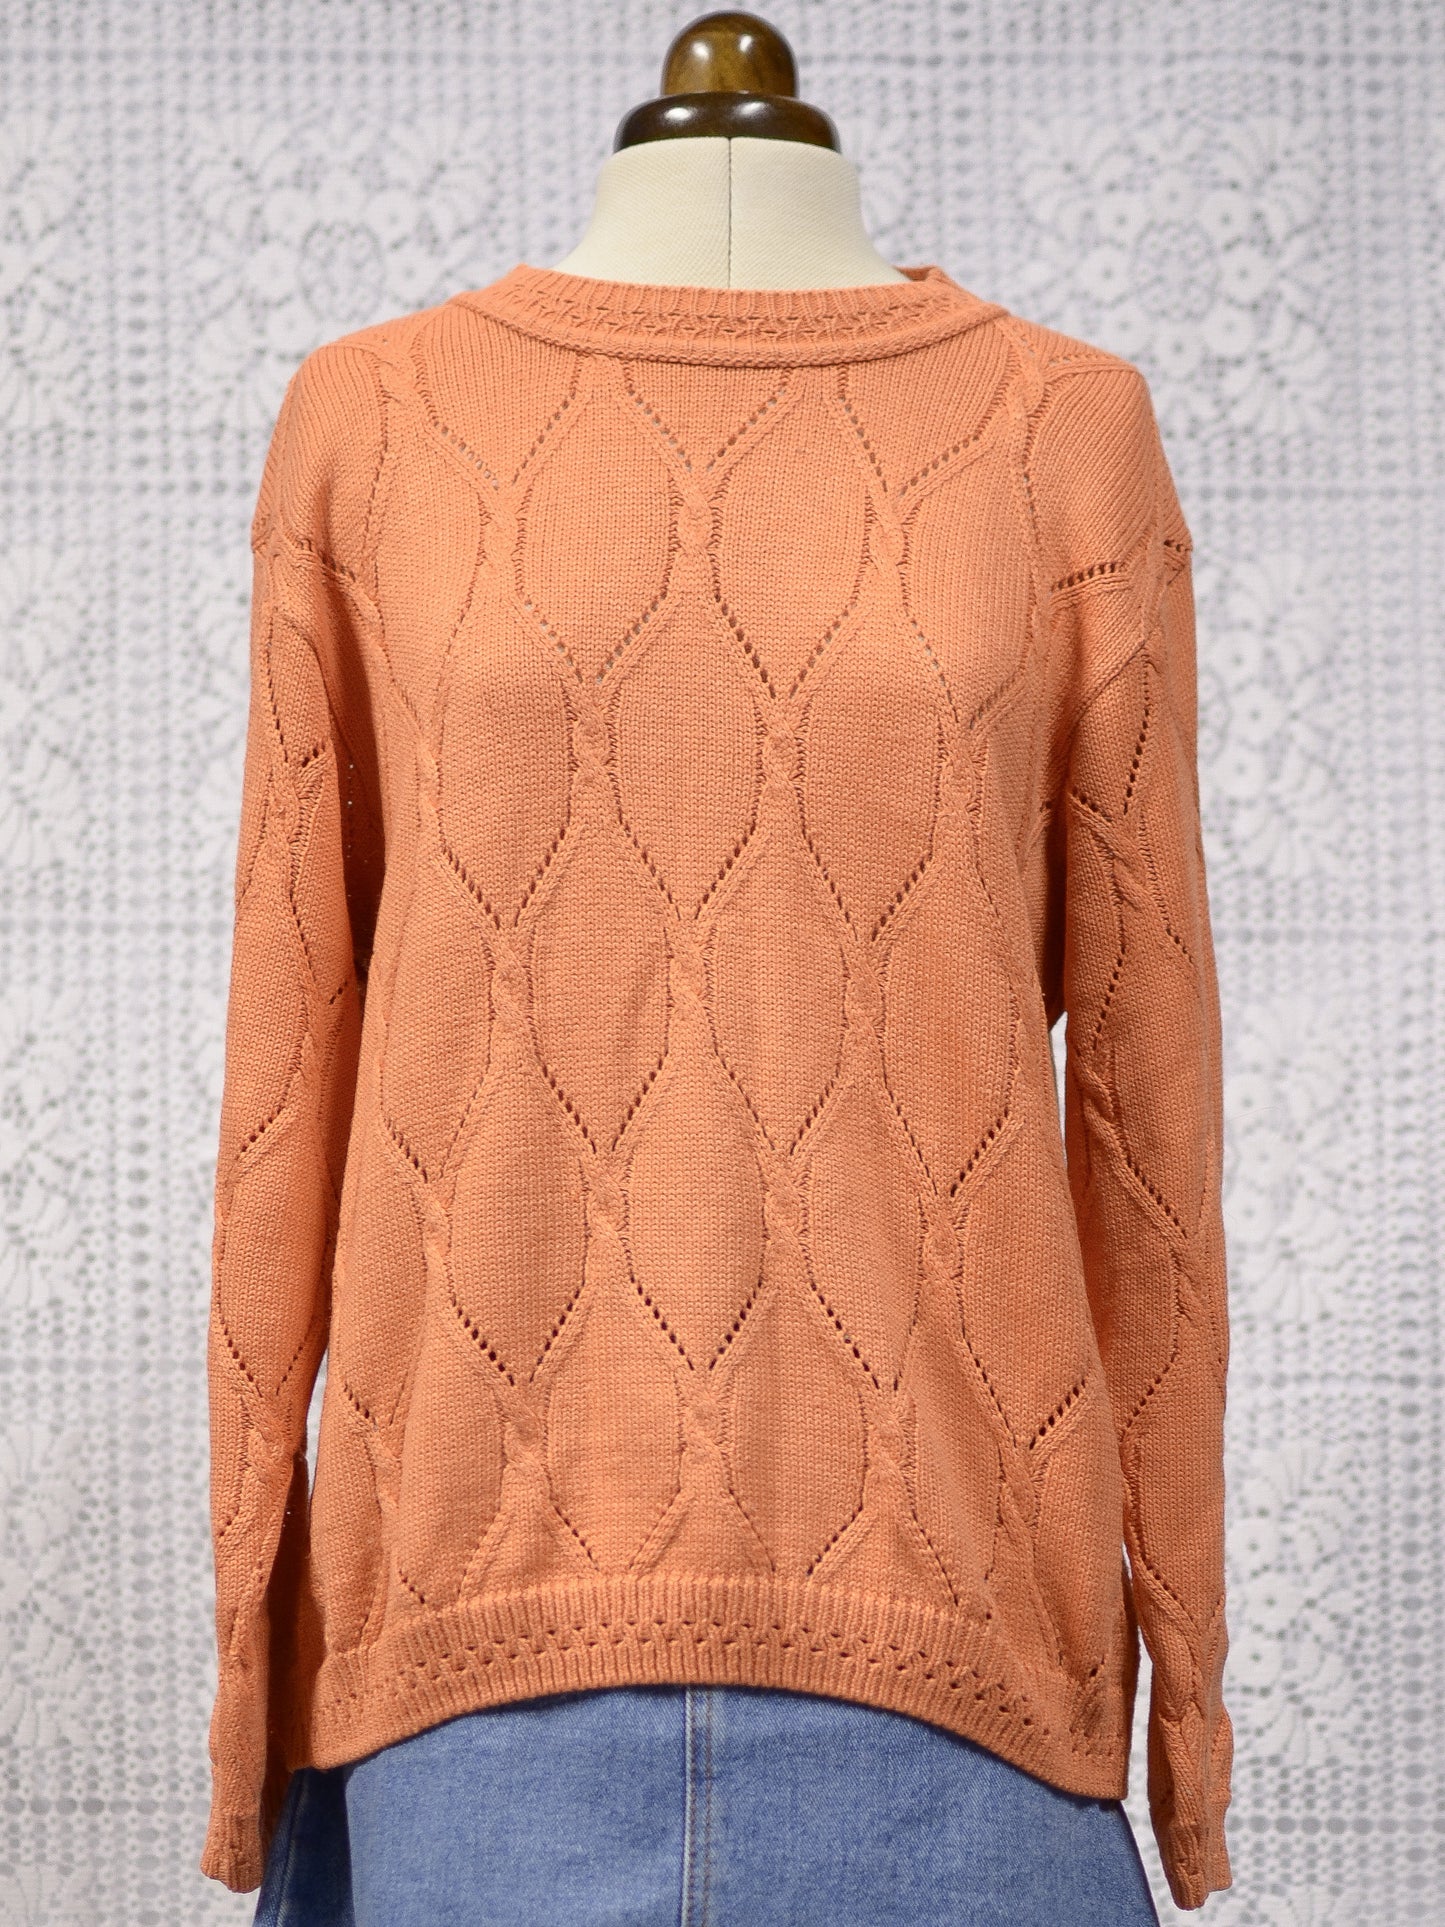 1990s Berketex dusky orange cable knit long sleeve jumper